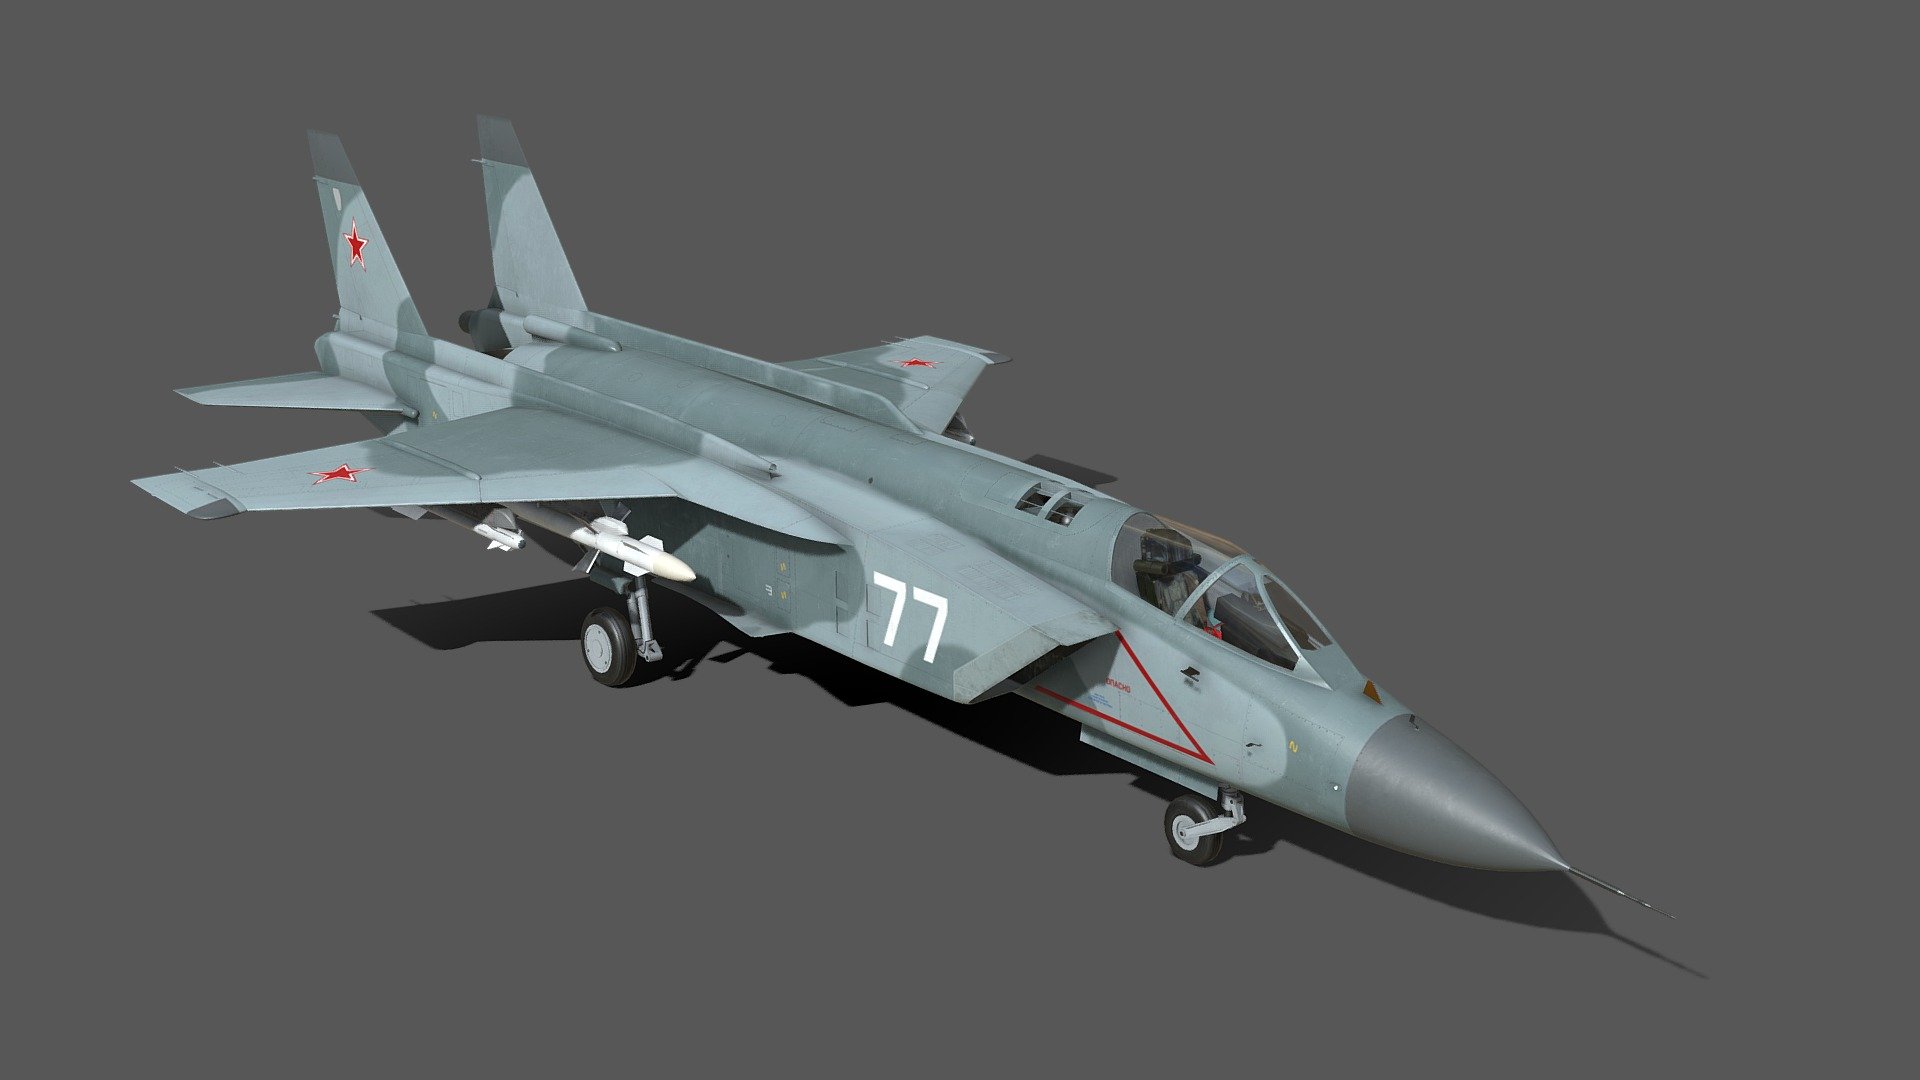 The Yakovlev Yak-141 ( NATO reporting name &ldquo;Freestyle